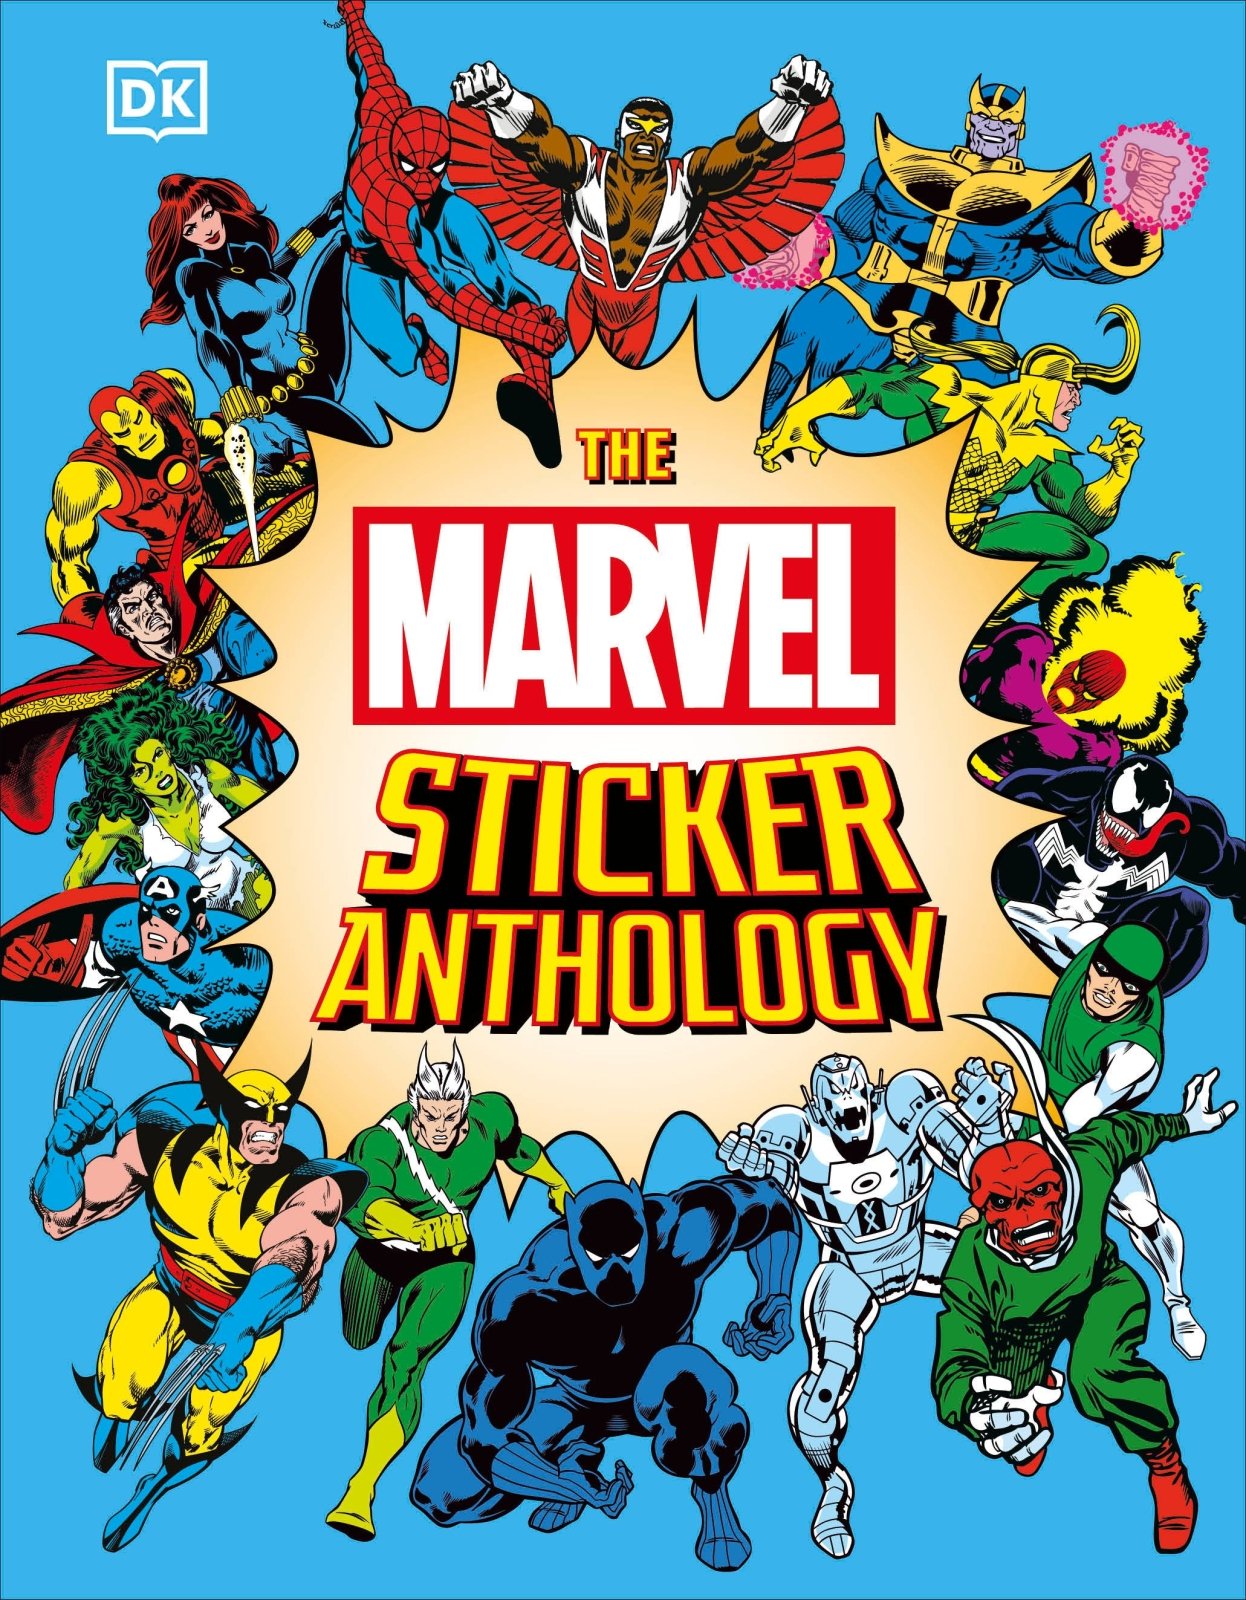 Marvel Sticker Anthology - The Fourth Place